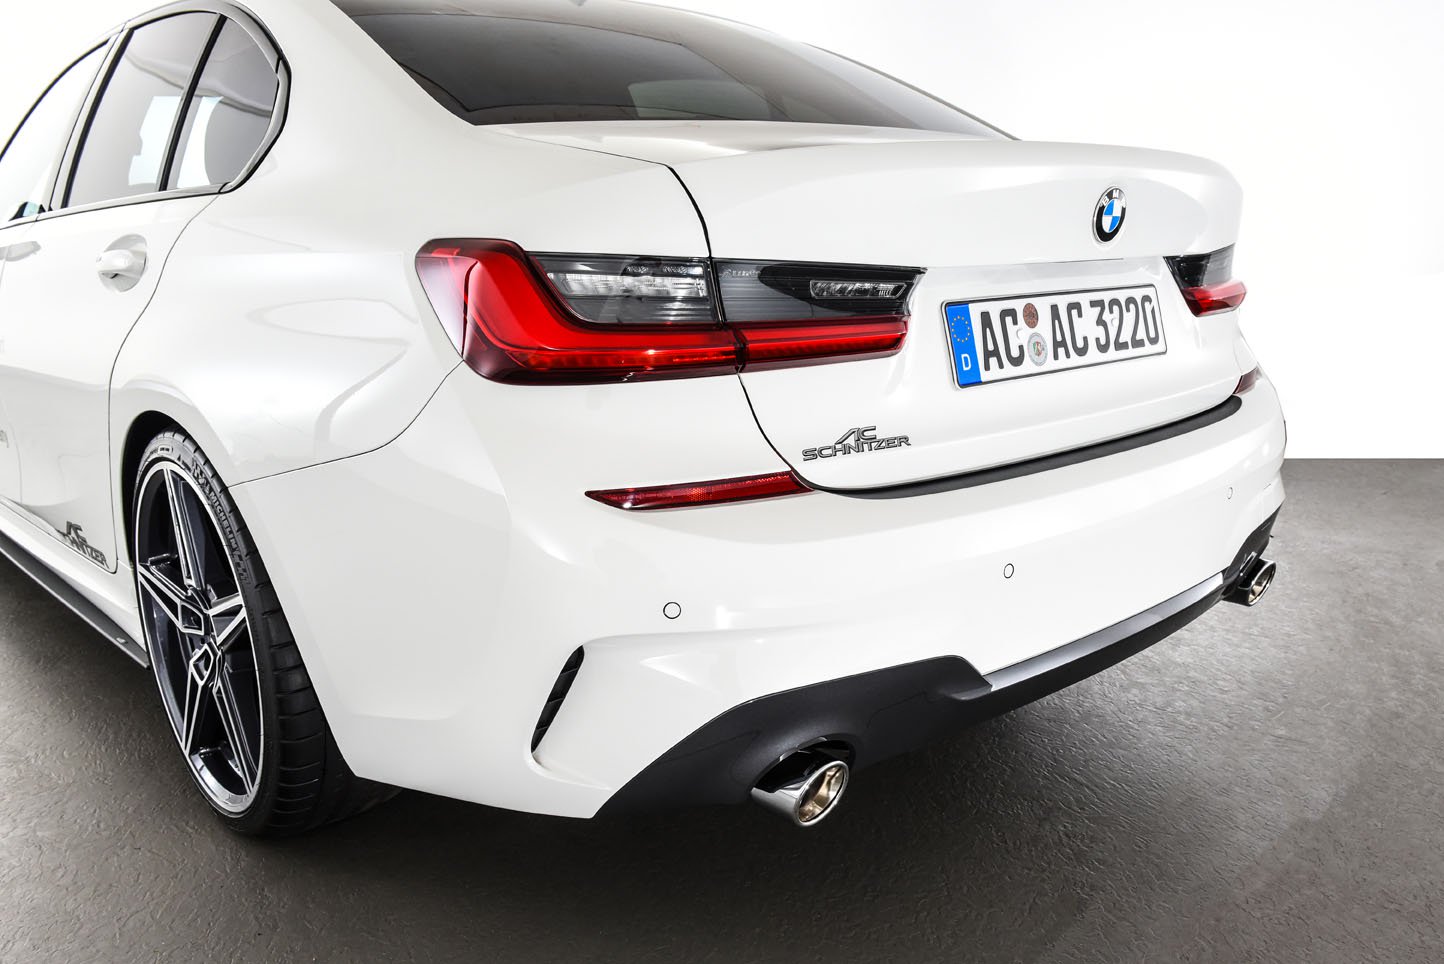 New BMW 3 Series Receives Aftermarket Upgrades From AC Schnitzer -  autoevolution